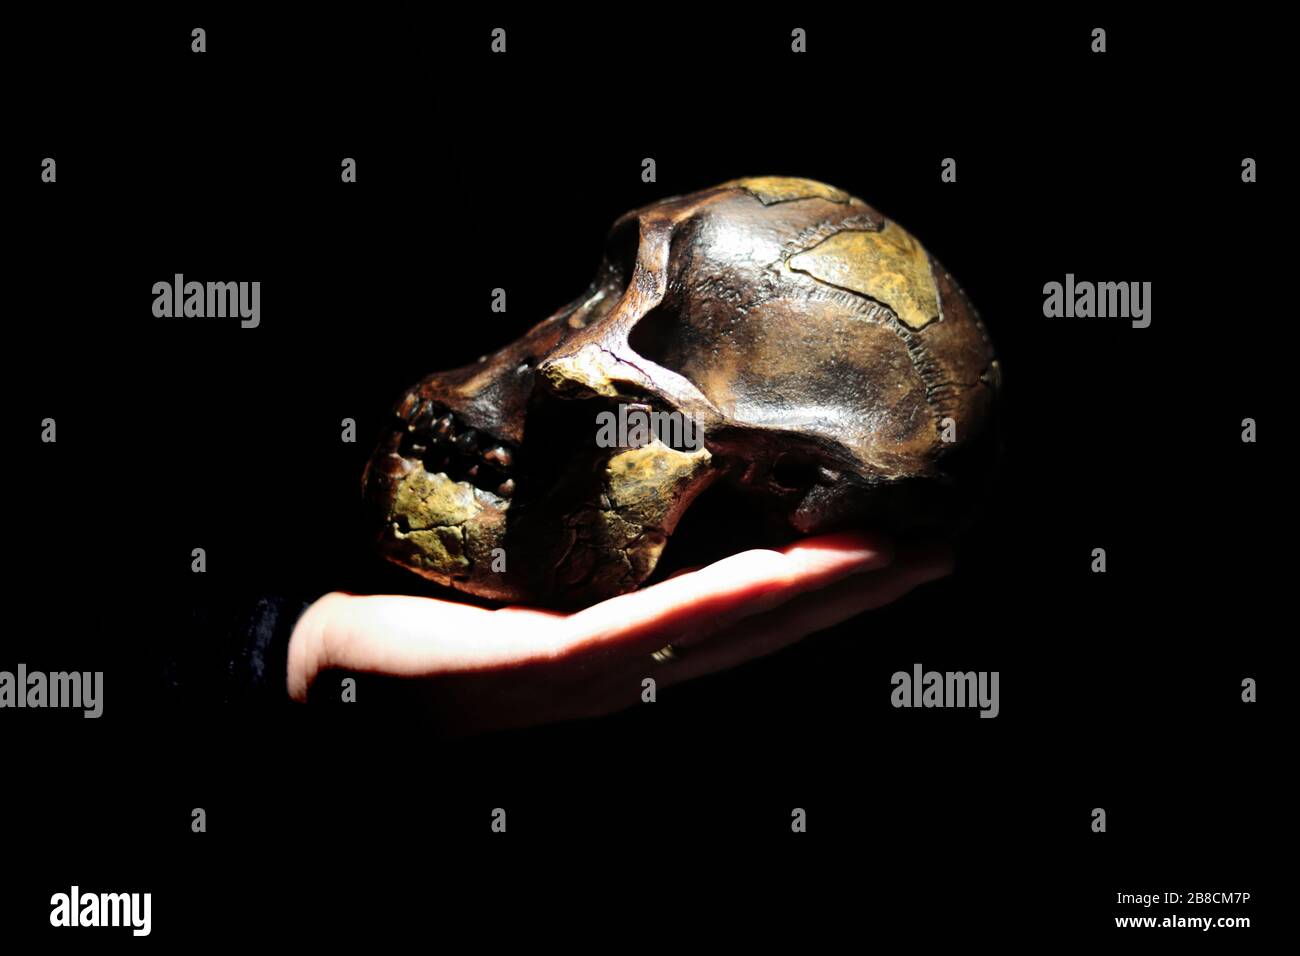 Model of human ancestor skull (Australopithecus afarensis) on a hand. Dark background. Stock Photo